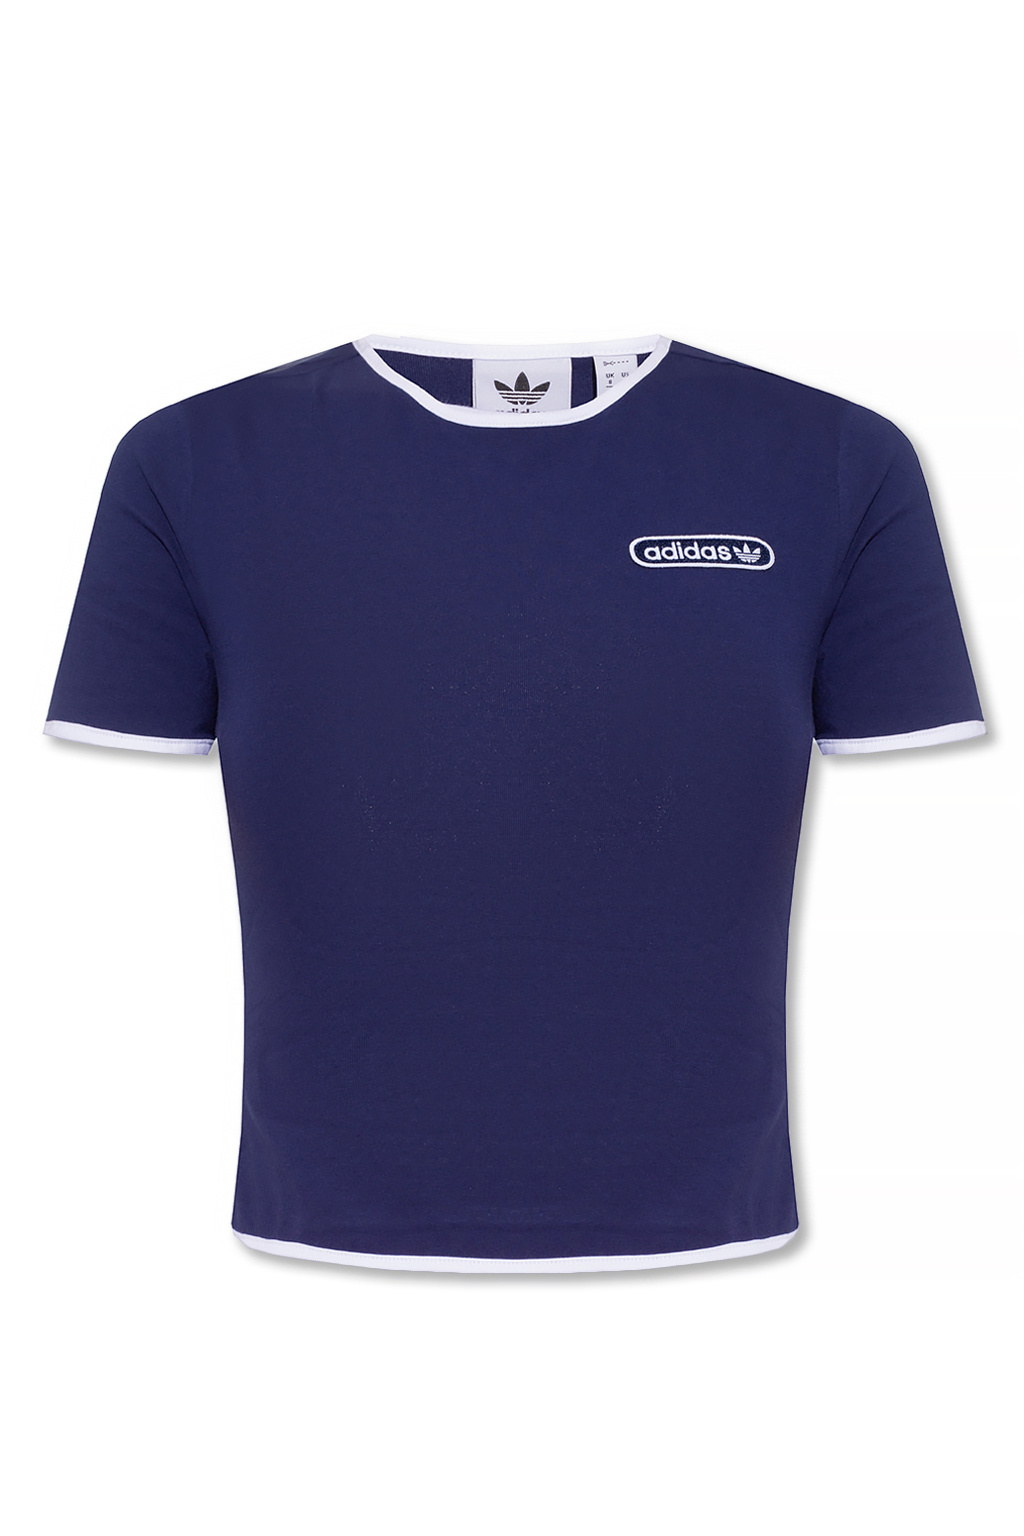 Navy blue Logo T Filles IetpShops - - ADIDAS Junior shirt Tights adidas Originals 3 Stripe Australia Entraînement 